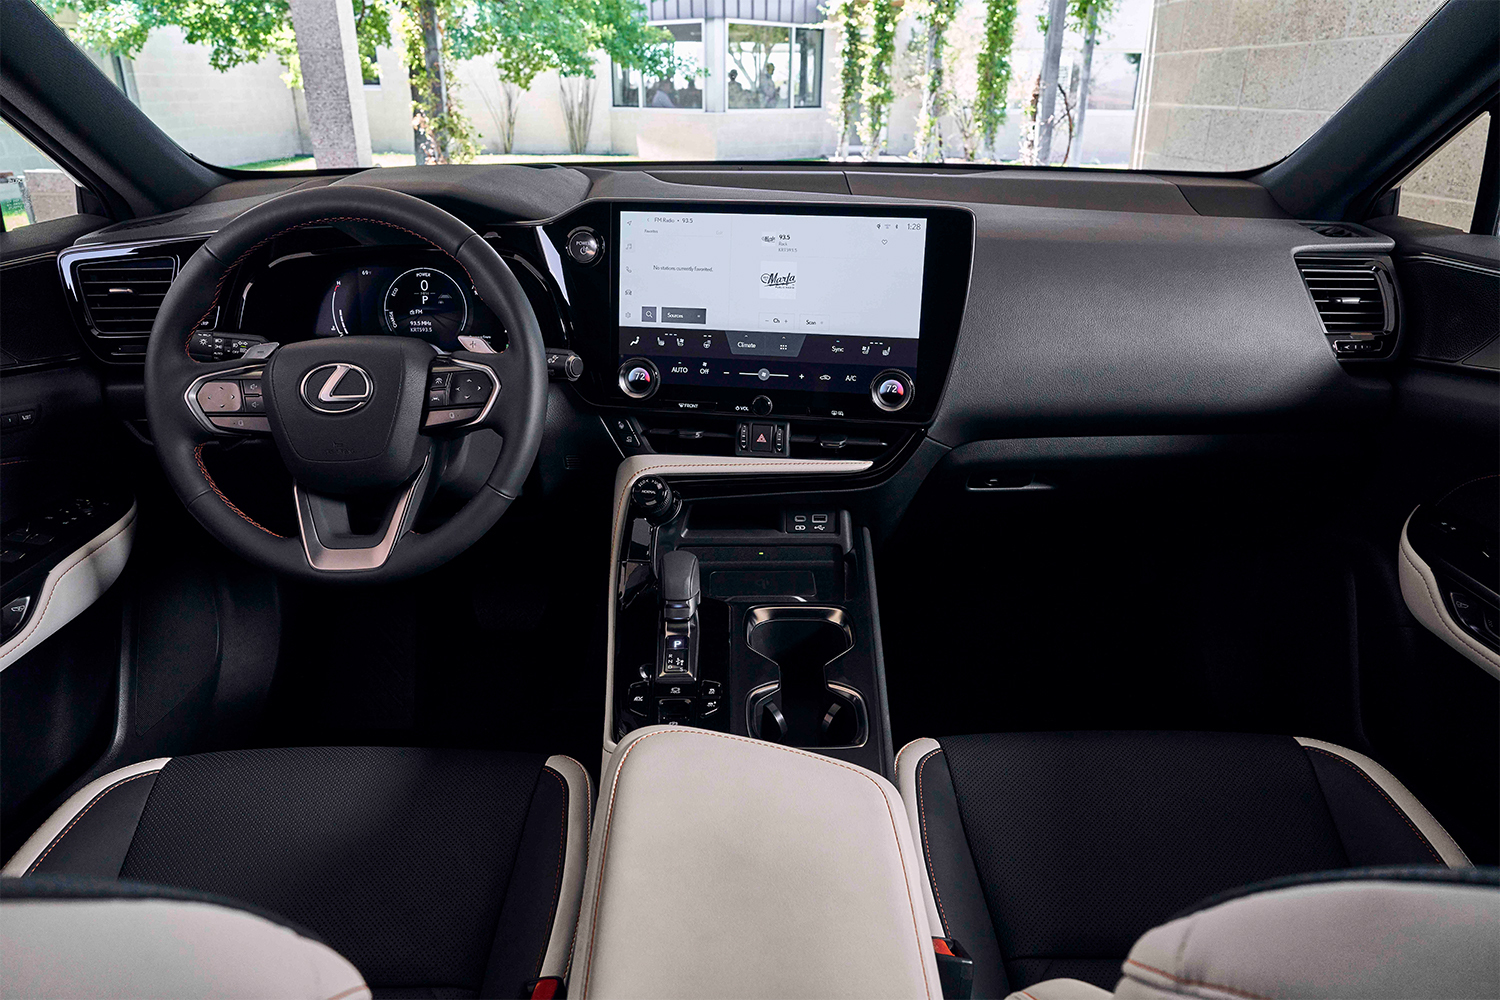 Interior of the 2022 Lexus NX 350h Hybrid SUV